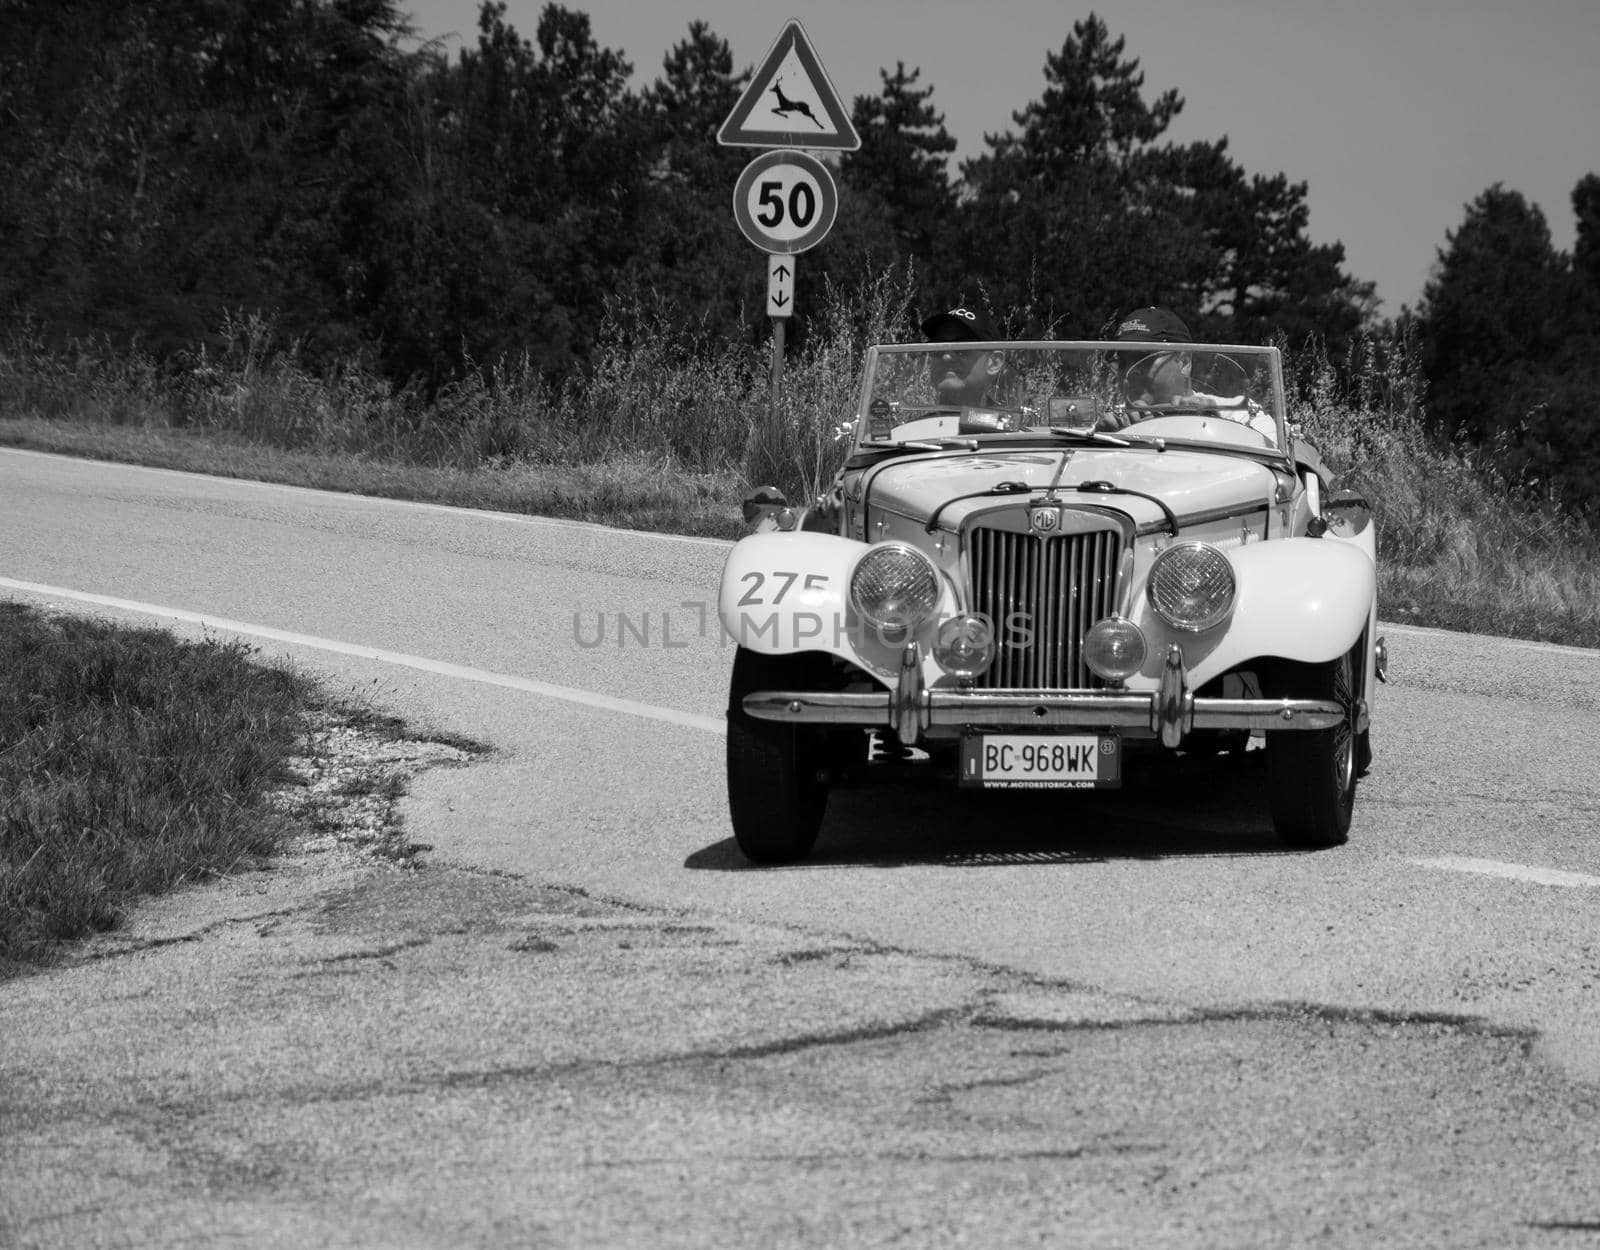 URBINO - ITALY - JUN 16 - 2022 : MG TF 1250 1953 on an old racing car in rally Mille Miglia 2022 the famous italian historical race (1927-1957